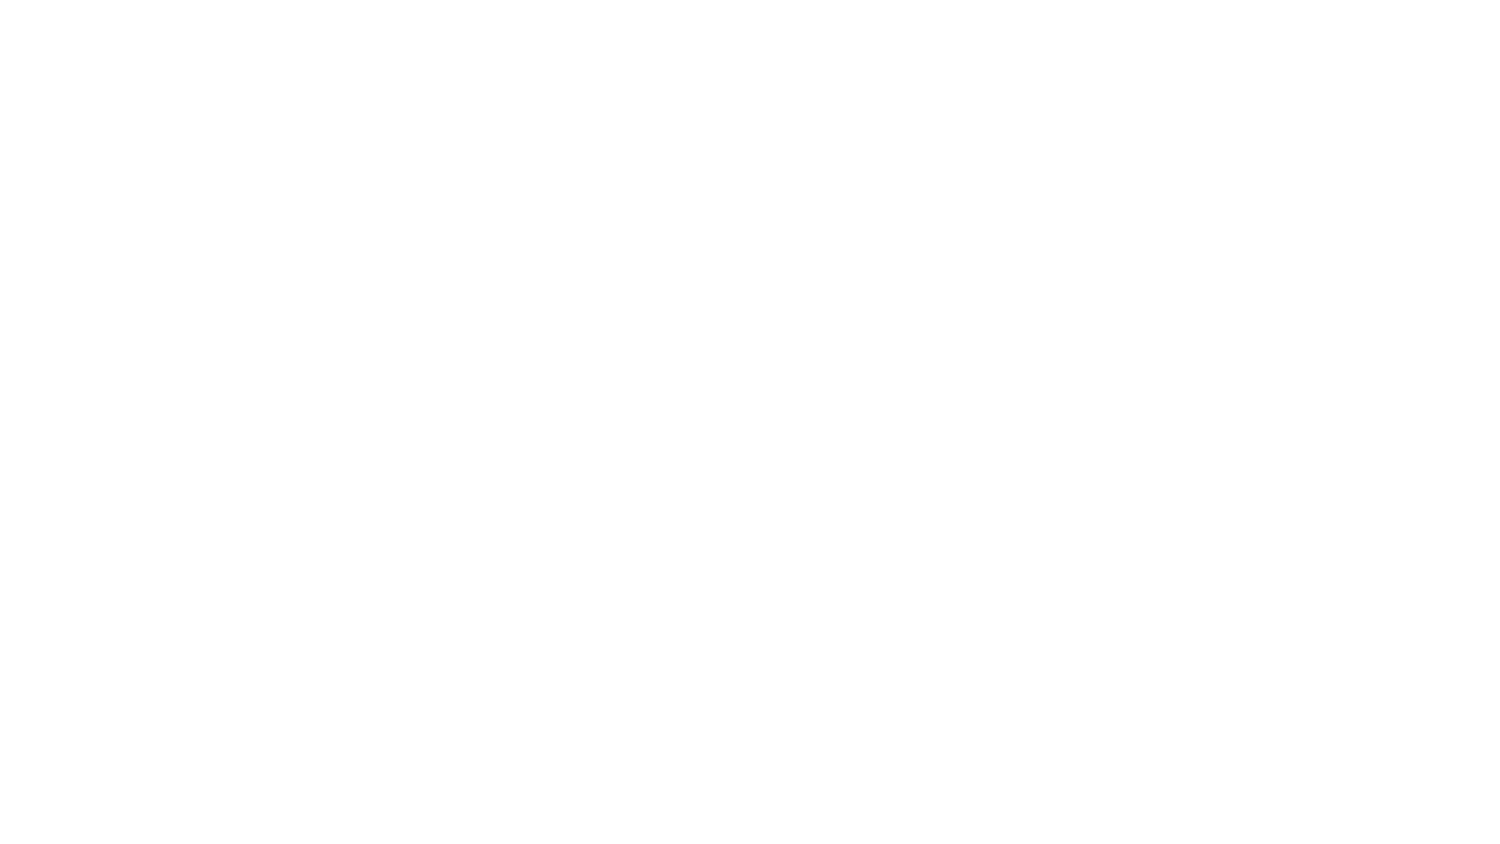 RoversElite